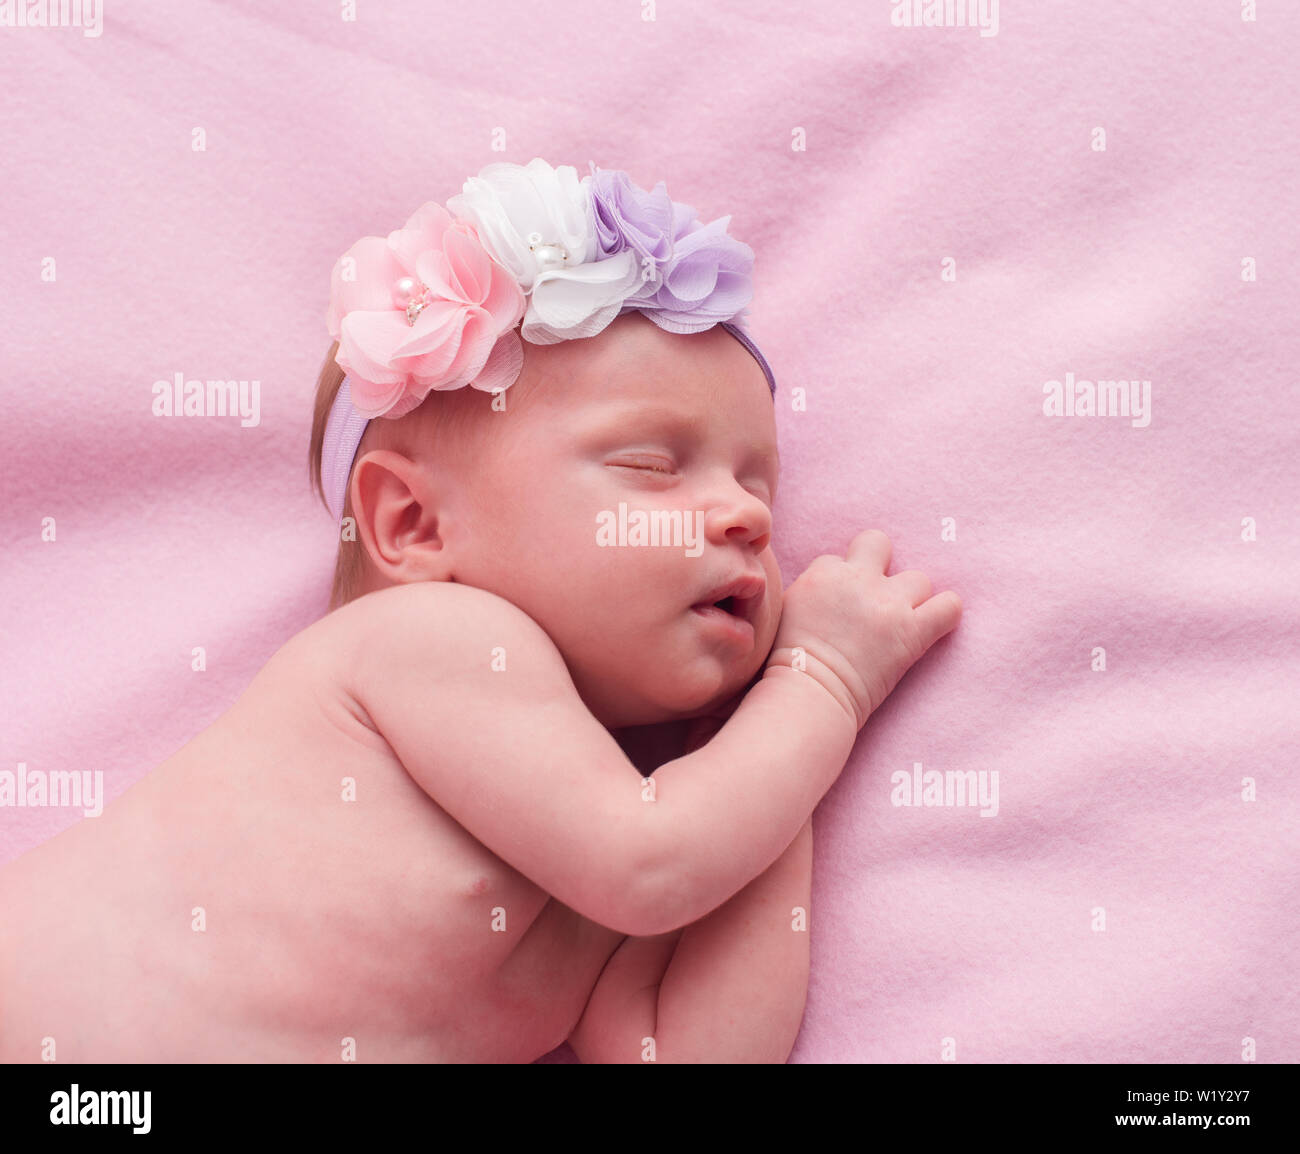 newborn baby girl sleeping with flowers on her head Stock Photo